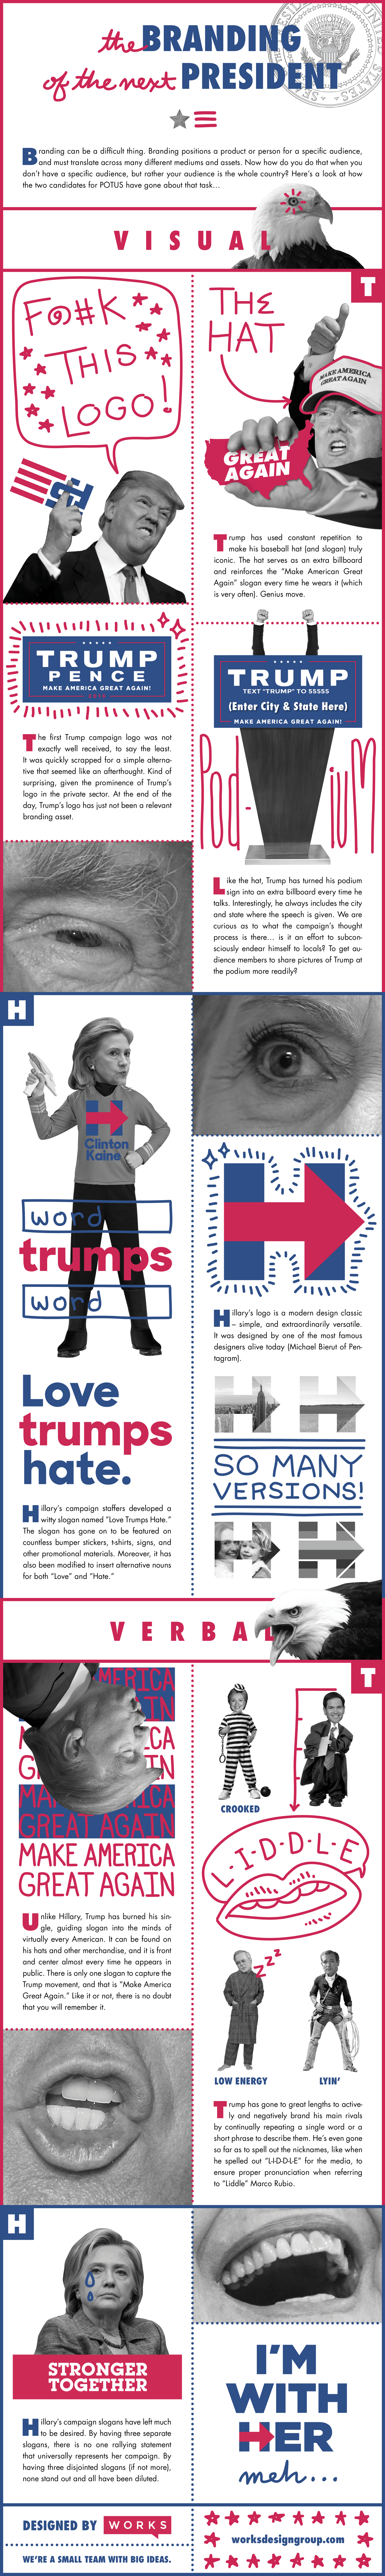 donald trump vs hillary clinton branding infographic